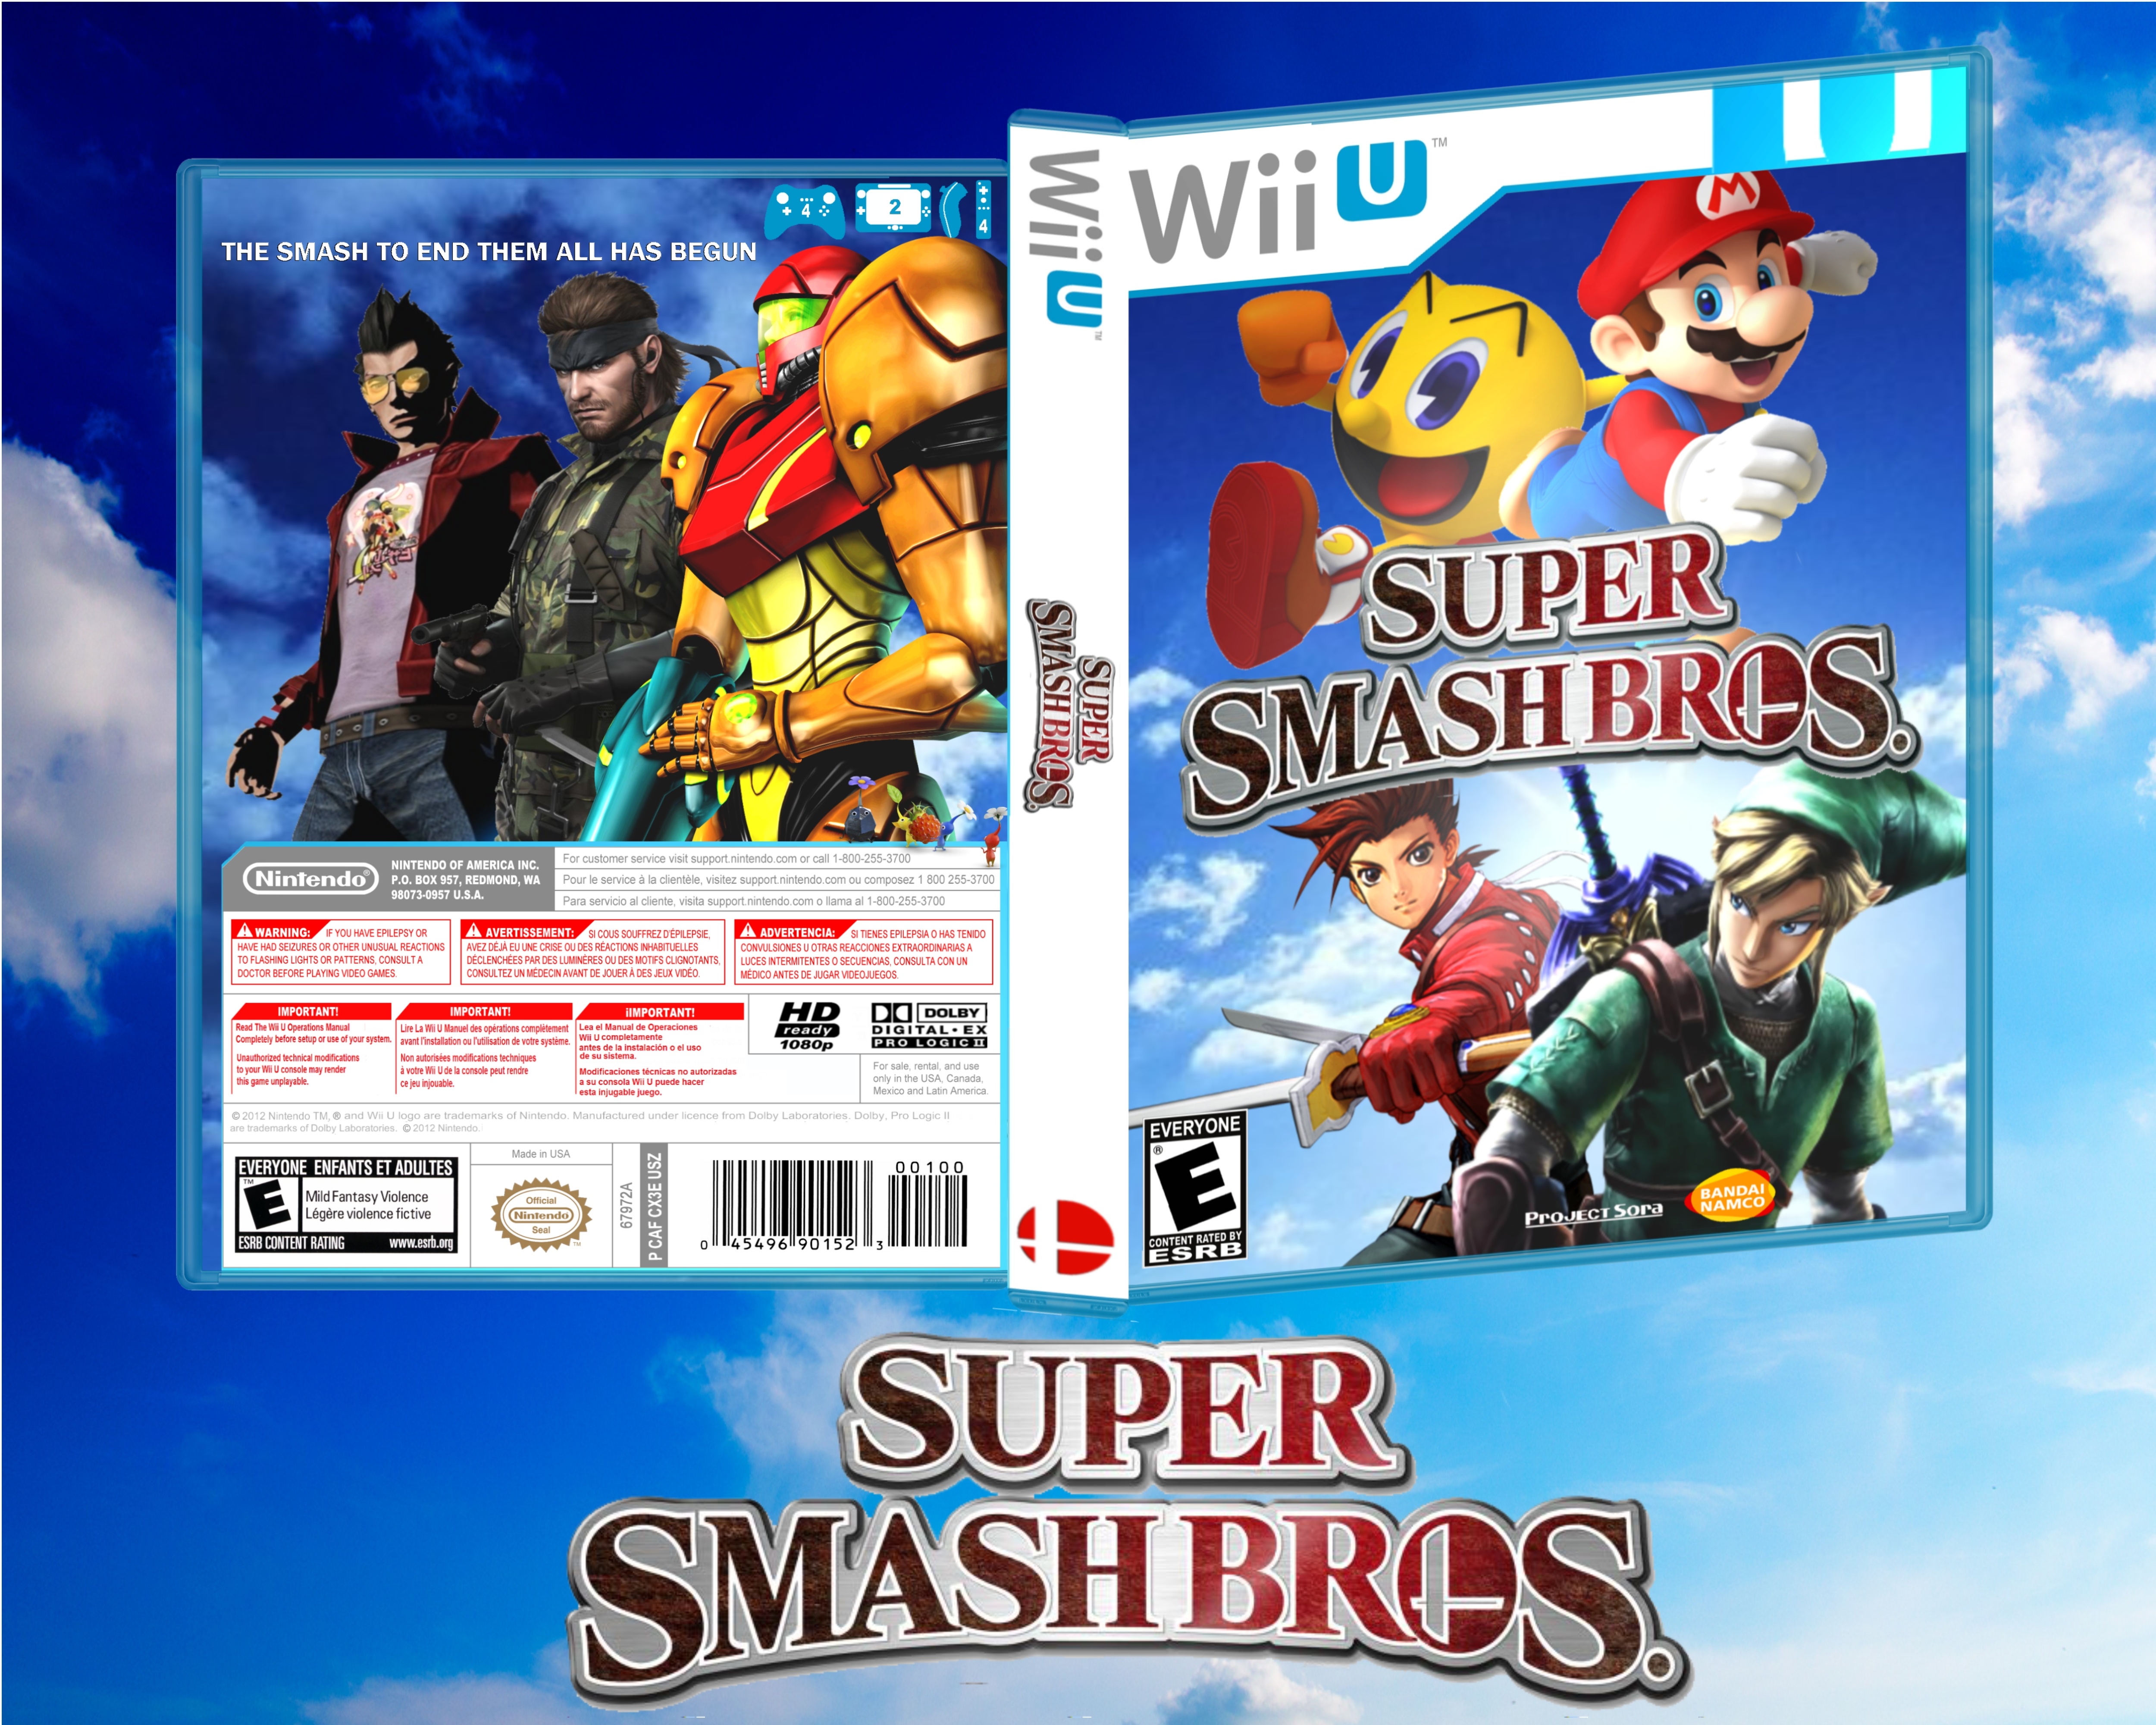 Super Smash Bros. (Wii U) box cover